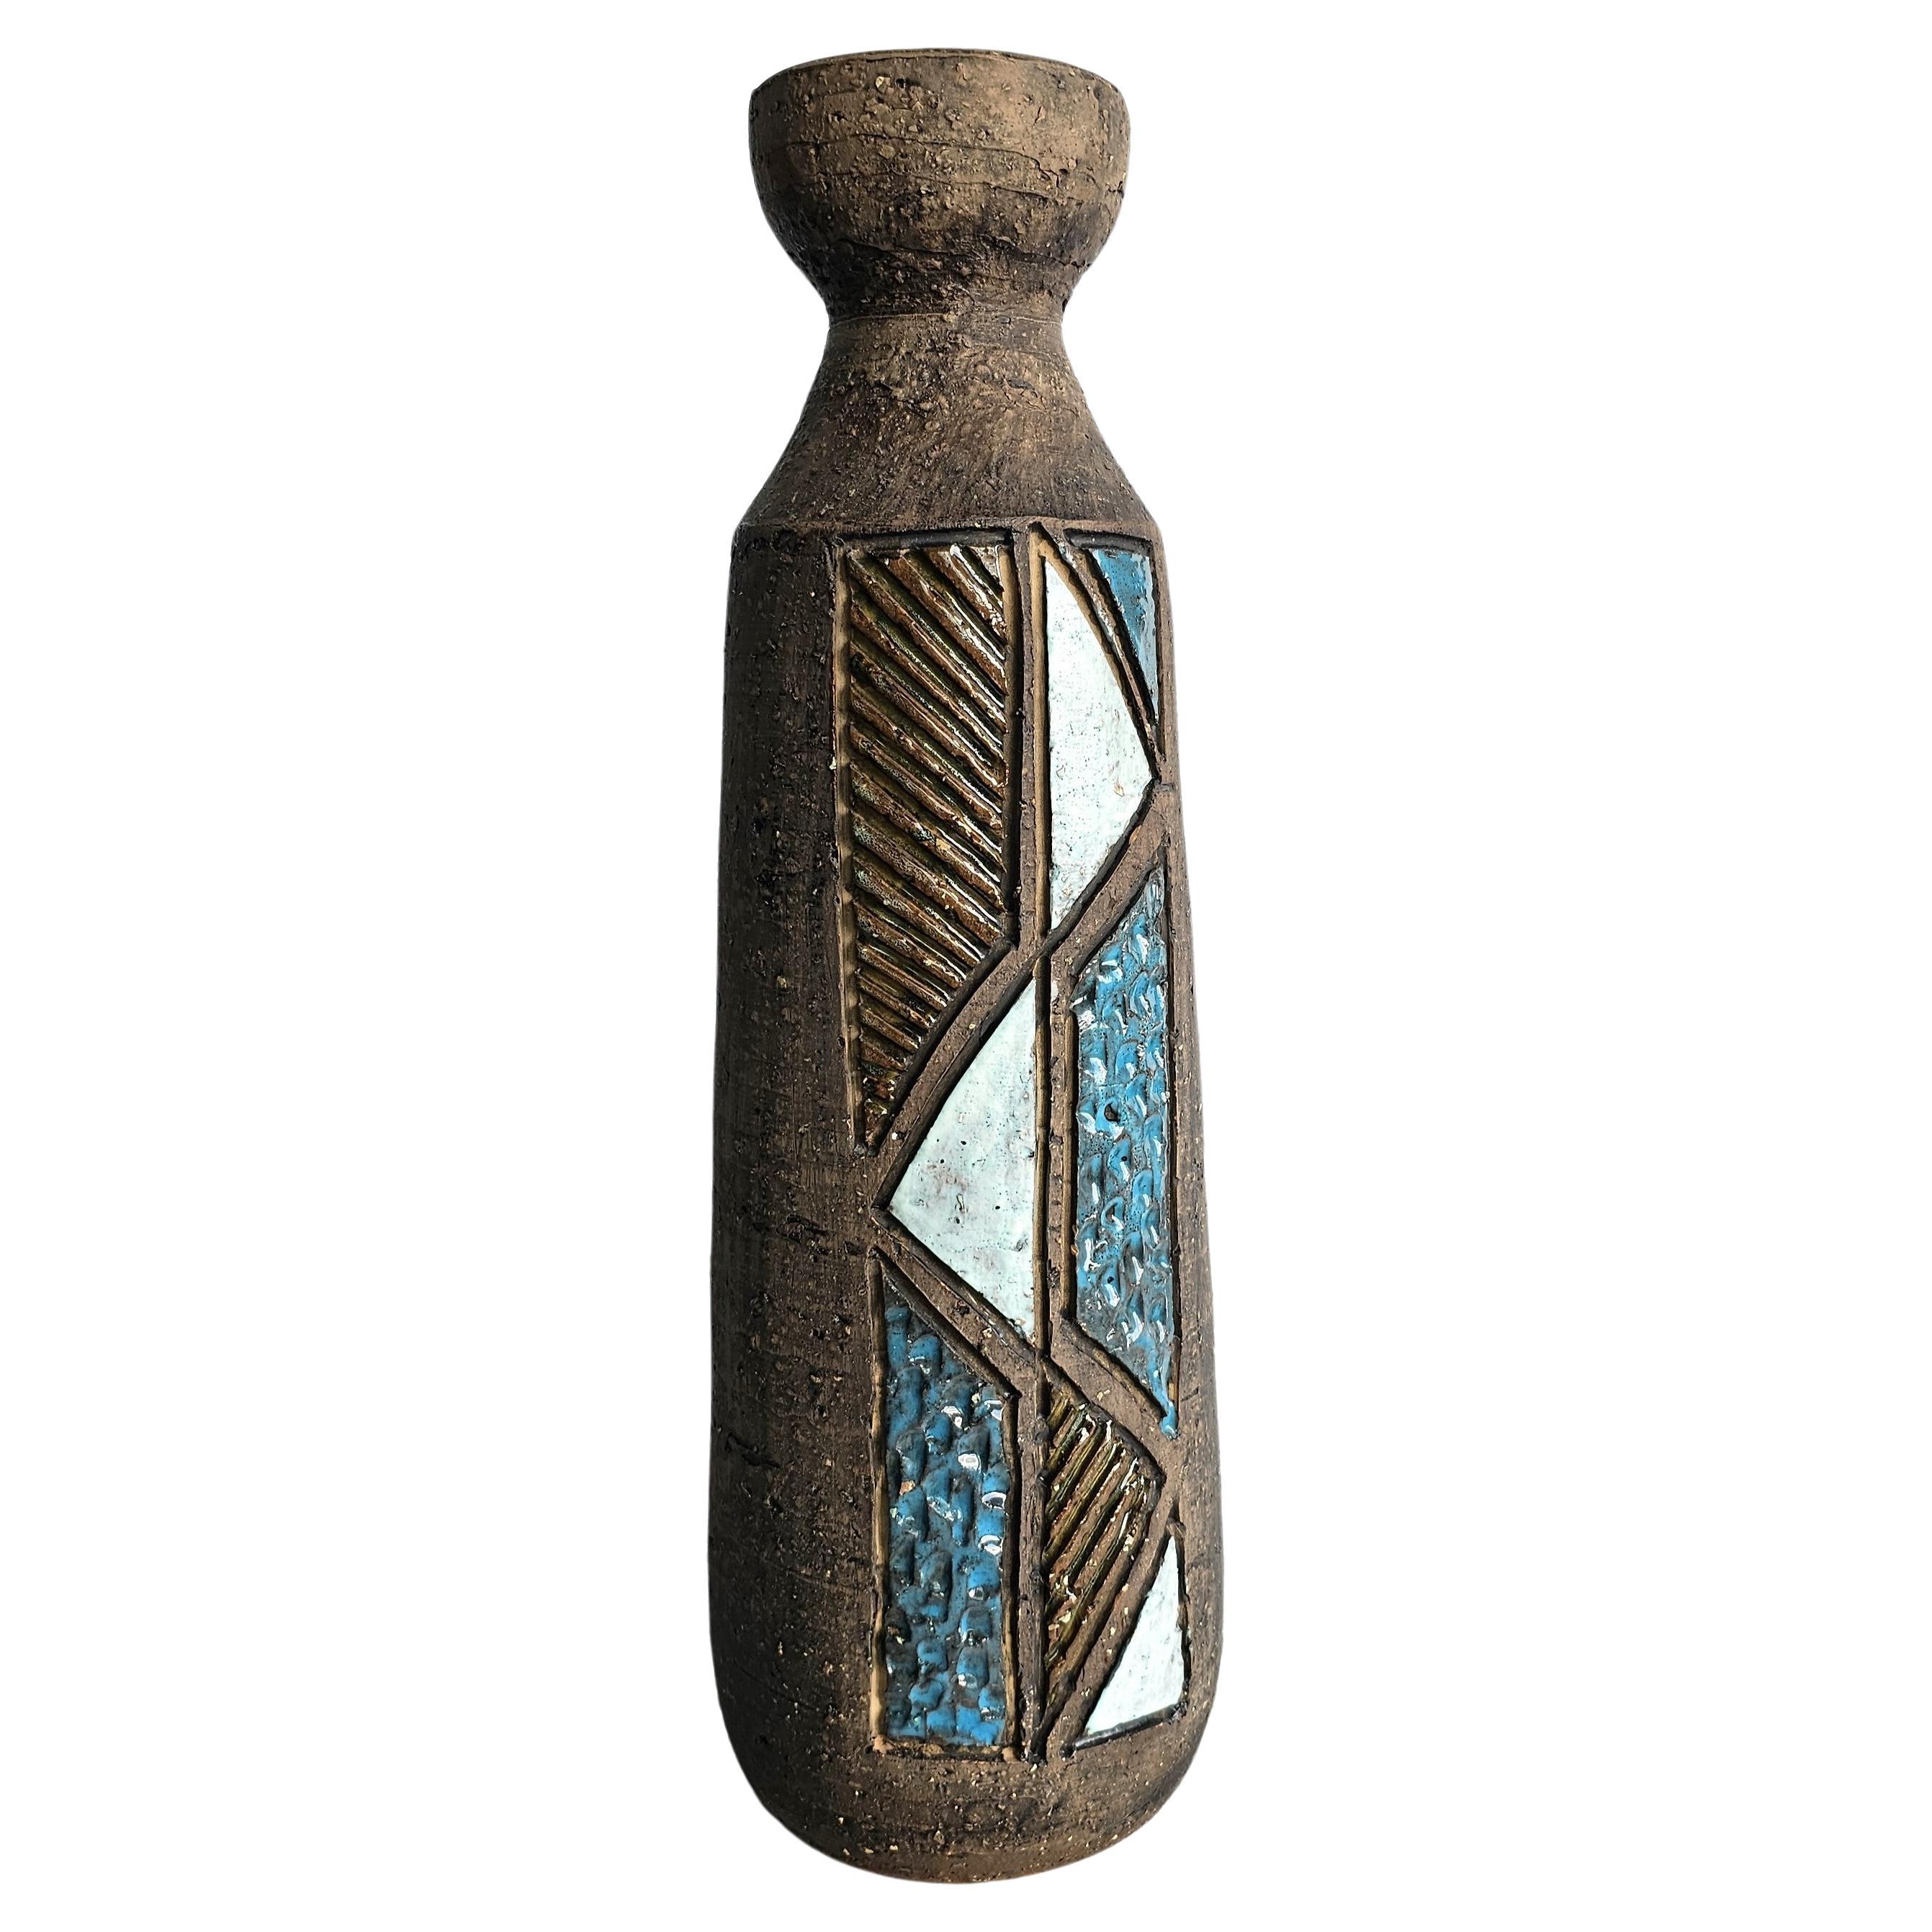 Tilgmans Keramik, Swedish Midcentury Modernist Sgraffito Sculptural Bottle Vase For Sale